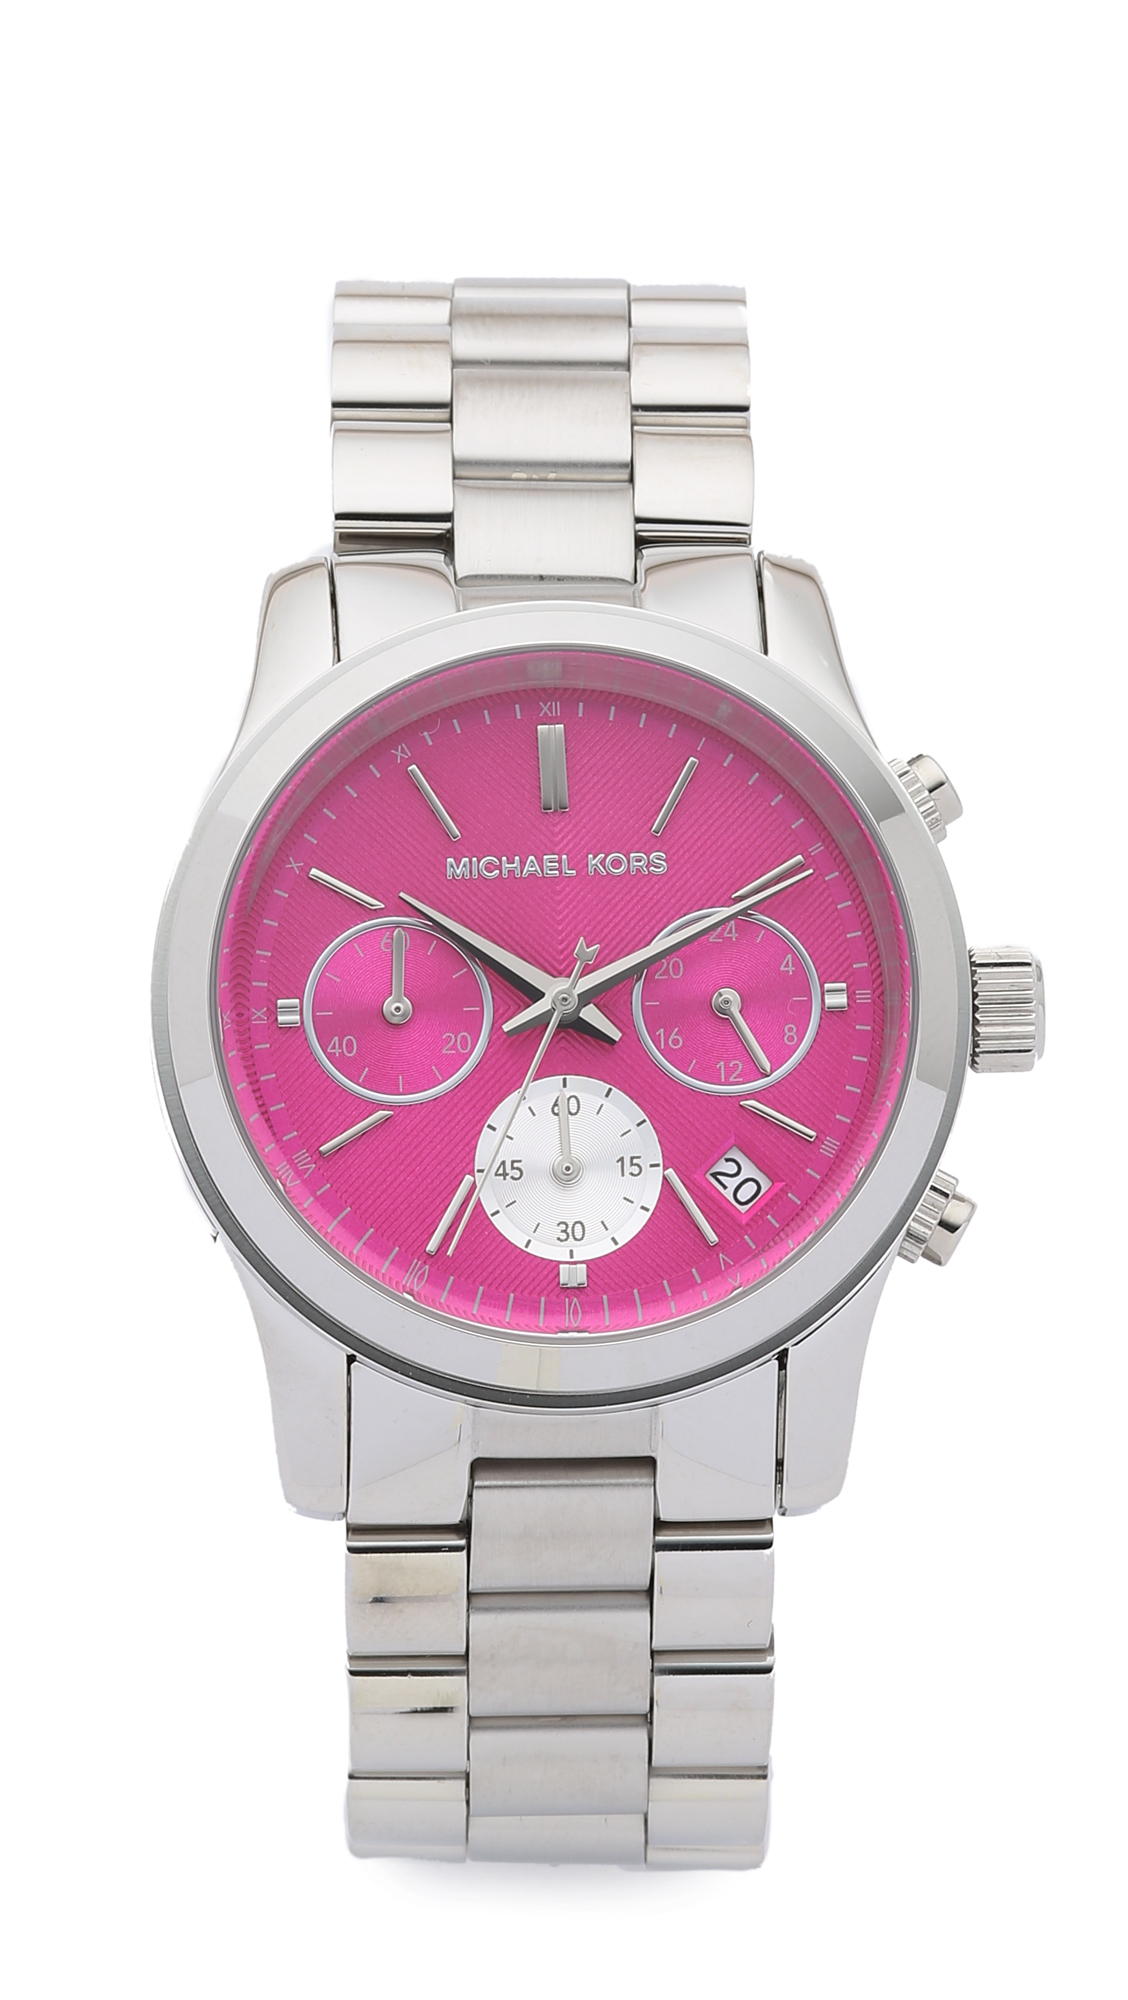 Lyst - Michael Kors Runway Watch - Silver/pink in Metallic